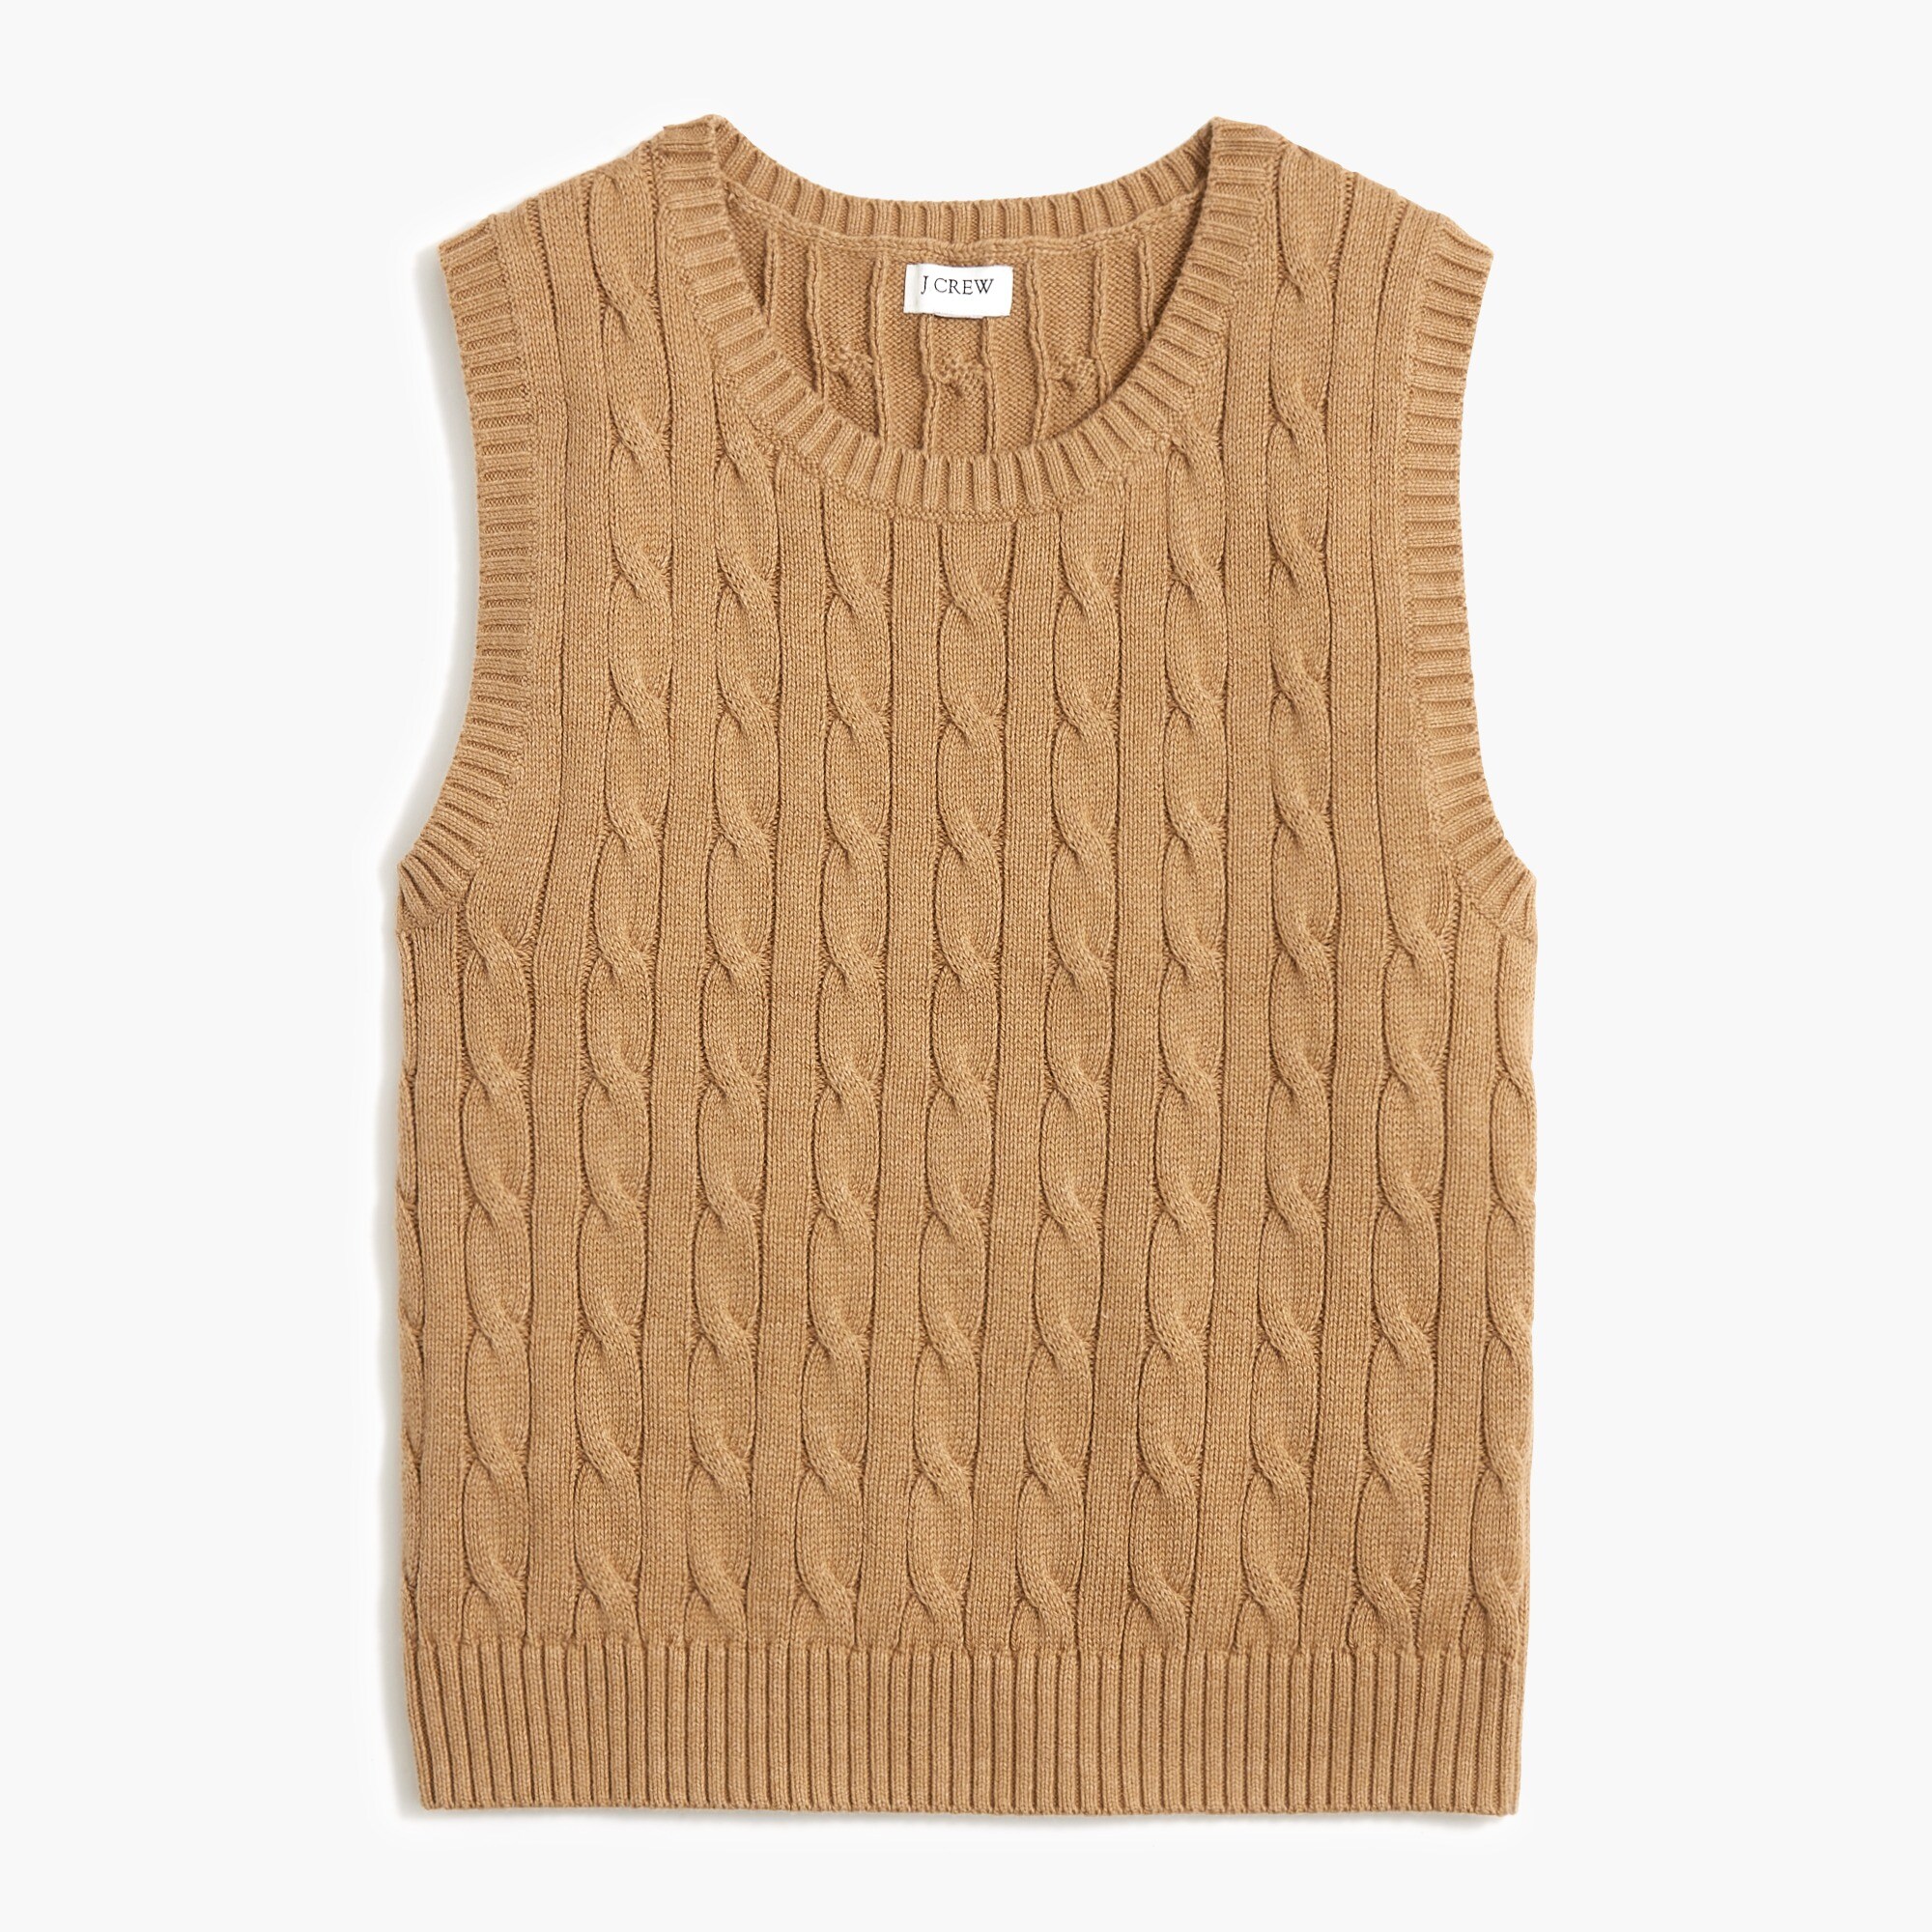  Cable-knit sweater-vest